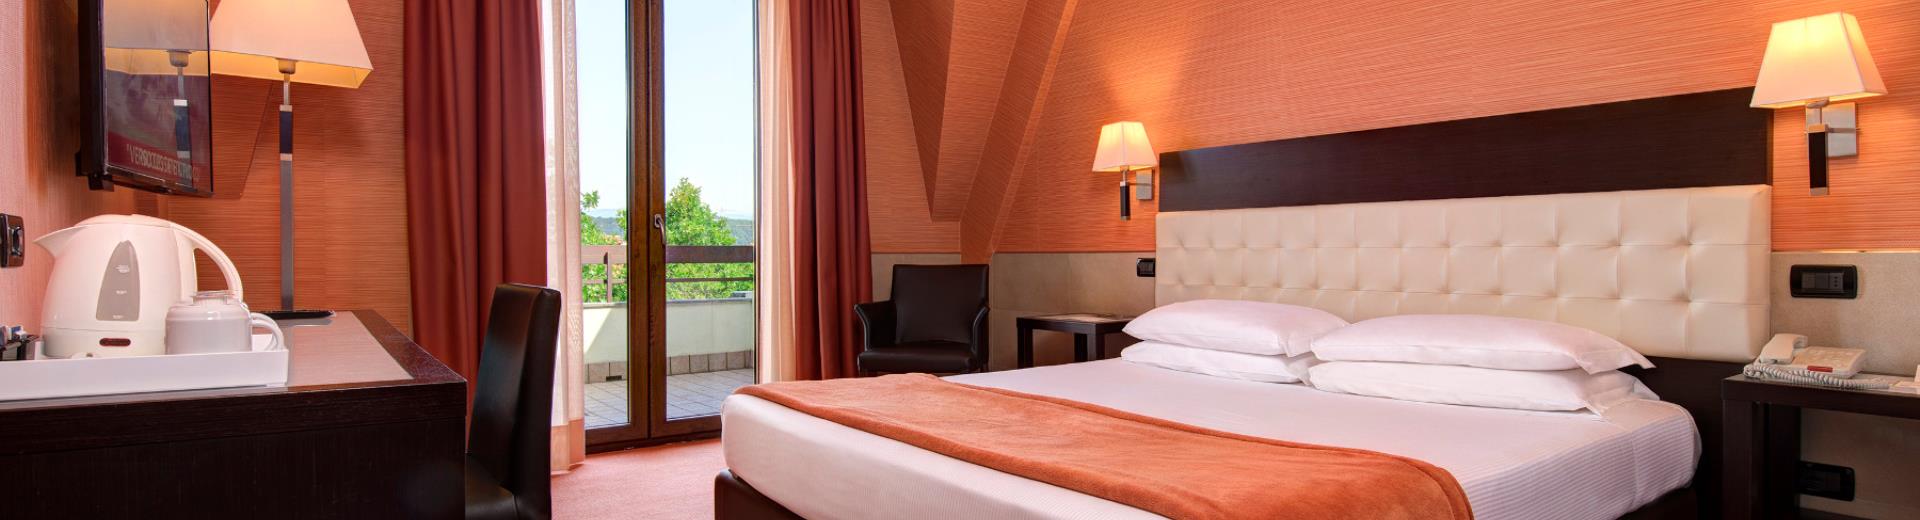 Double Superior Room - Best Western Gorizia Palace Hotel